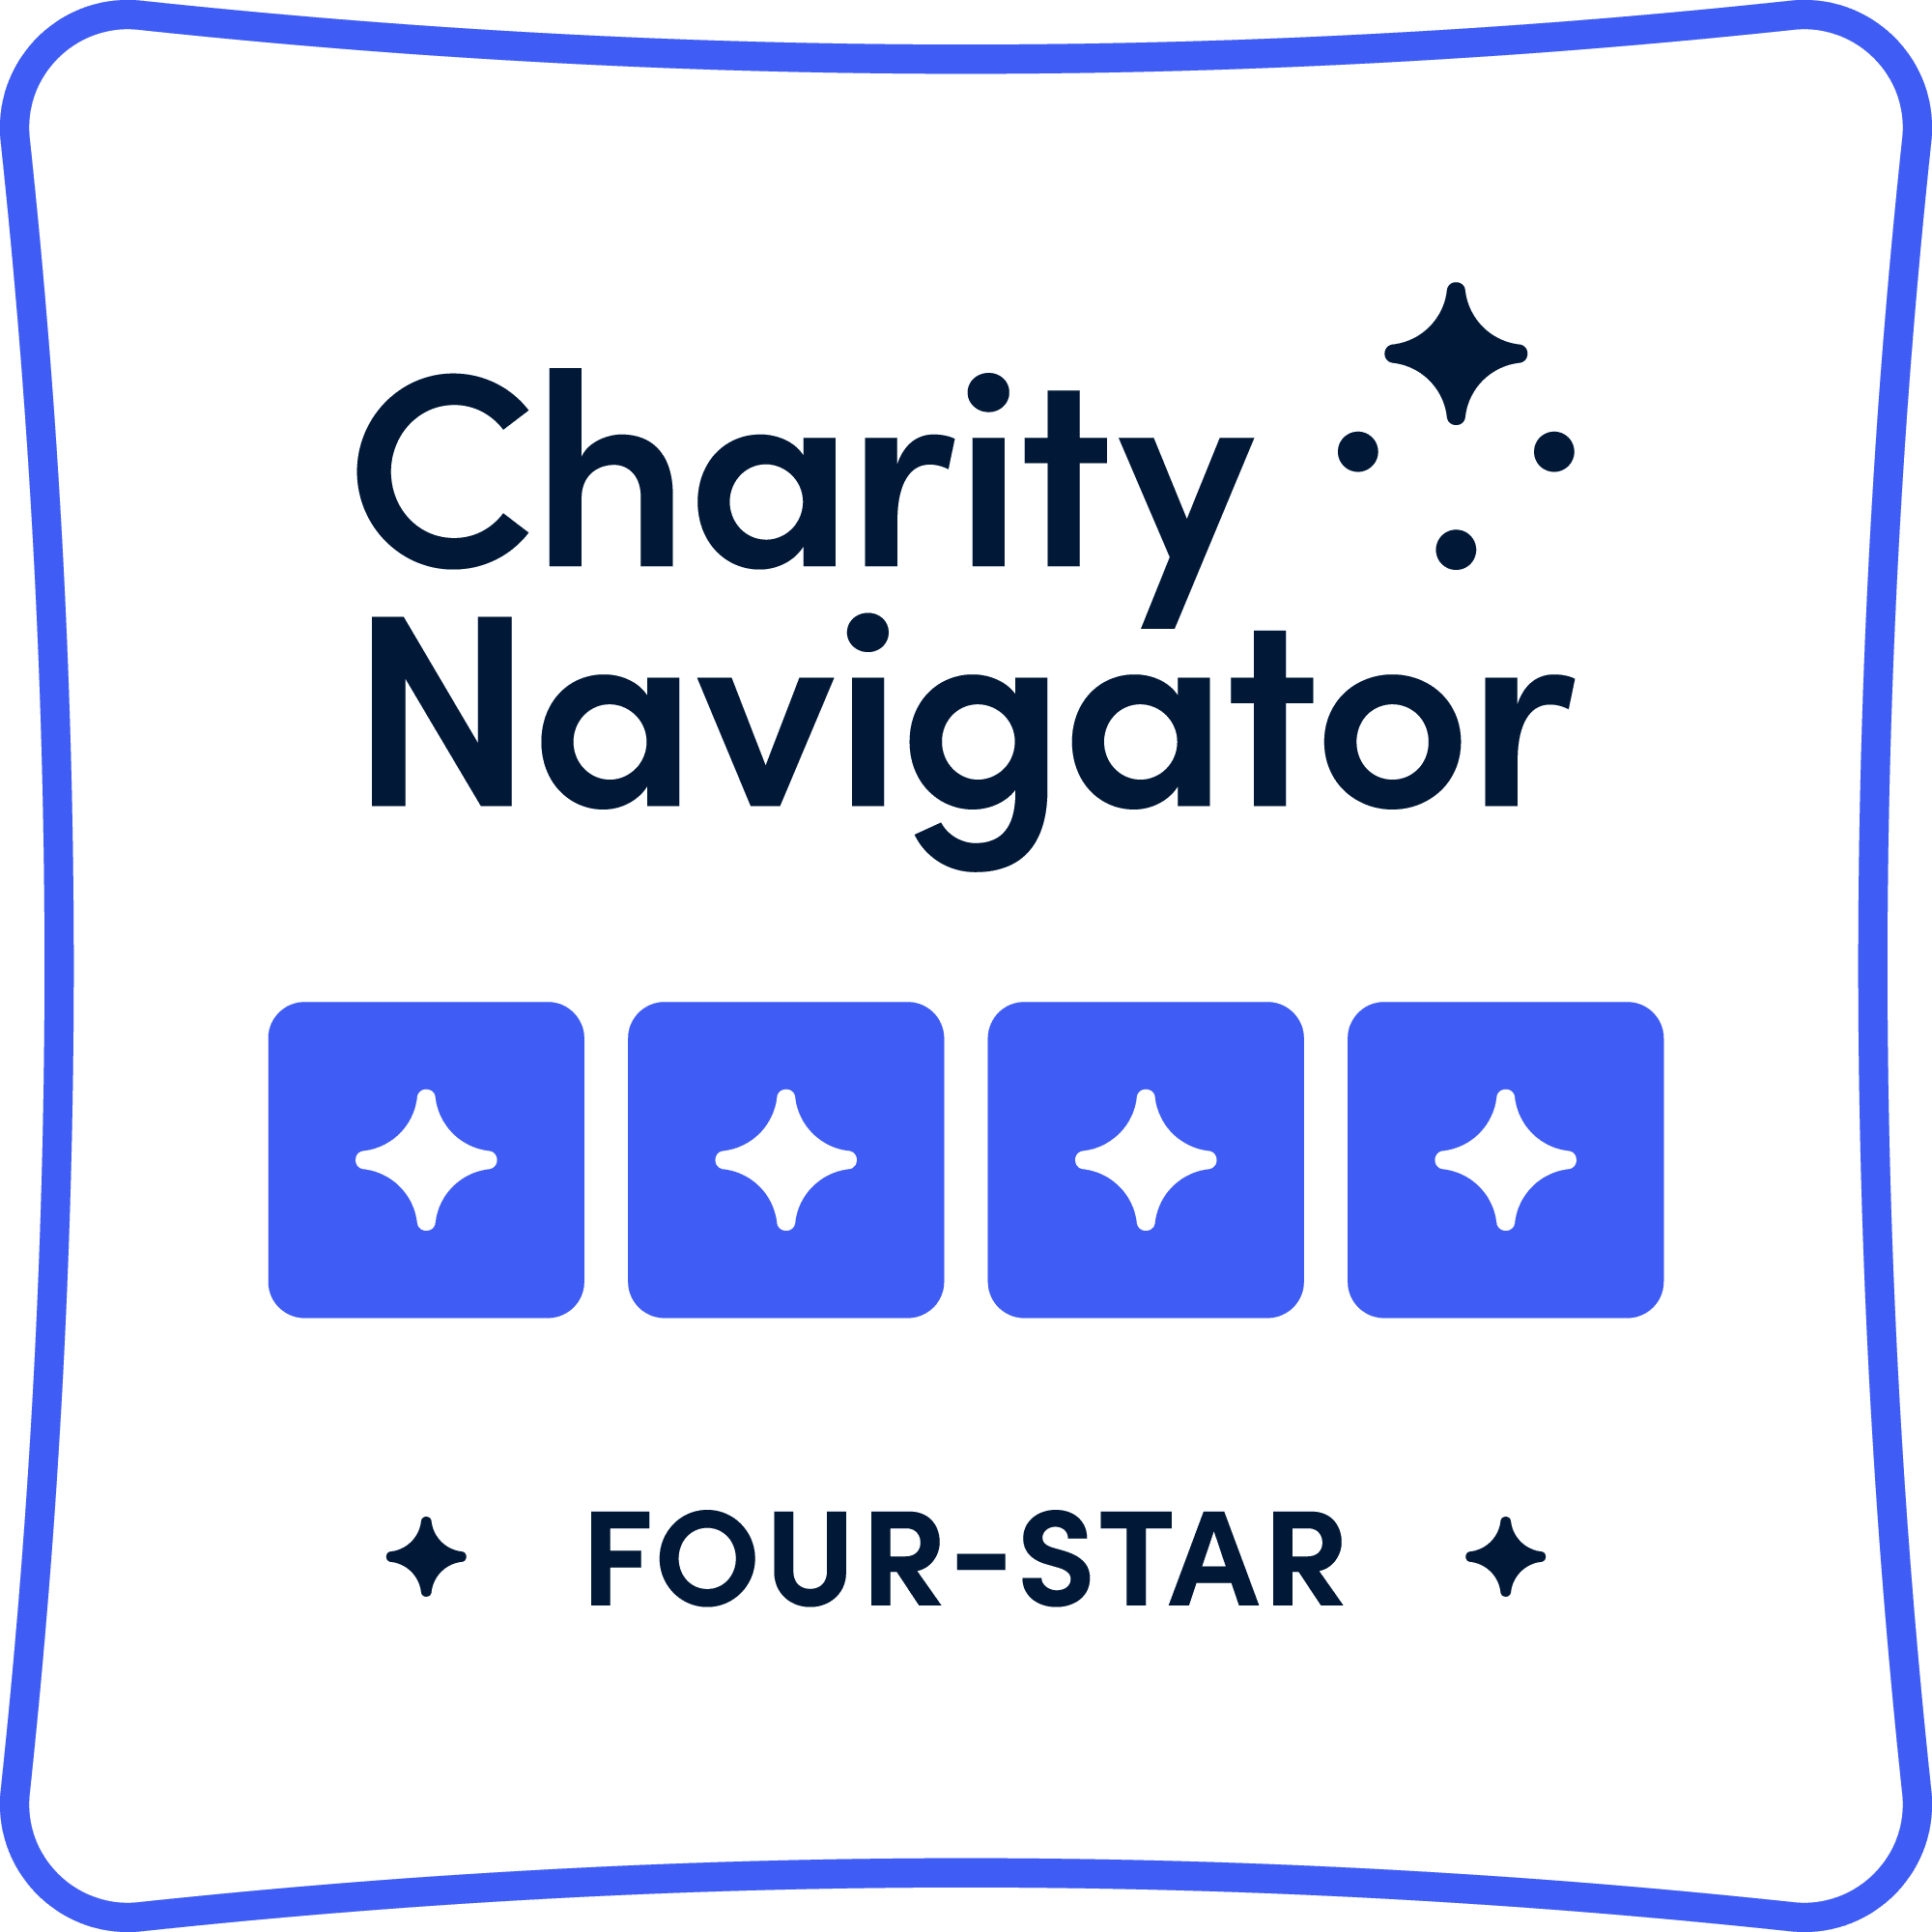 Charity navigator 4 star
badge